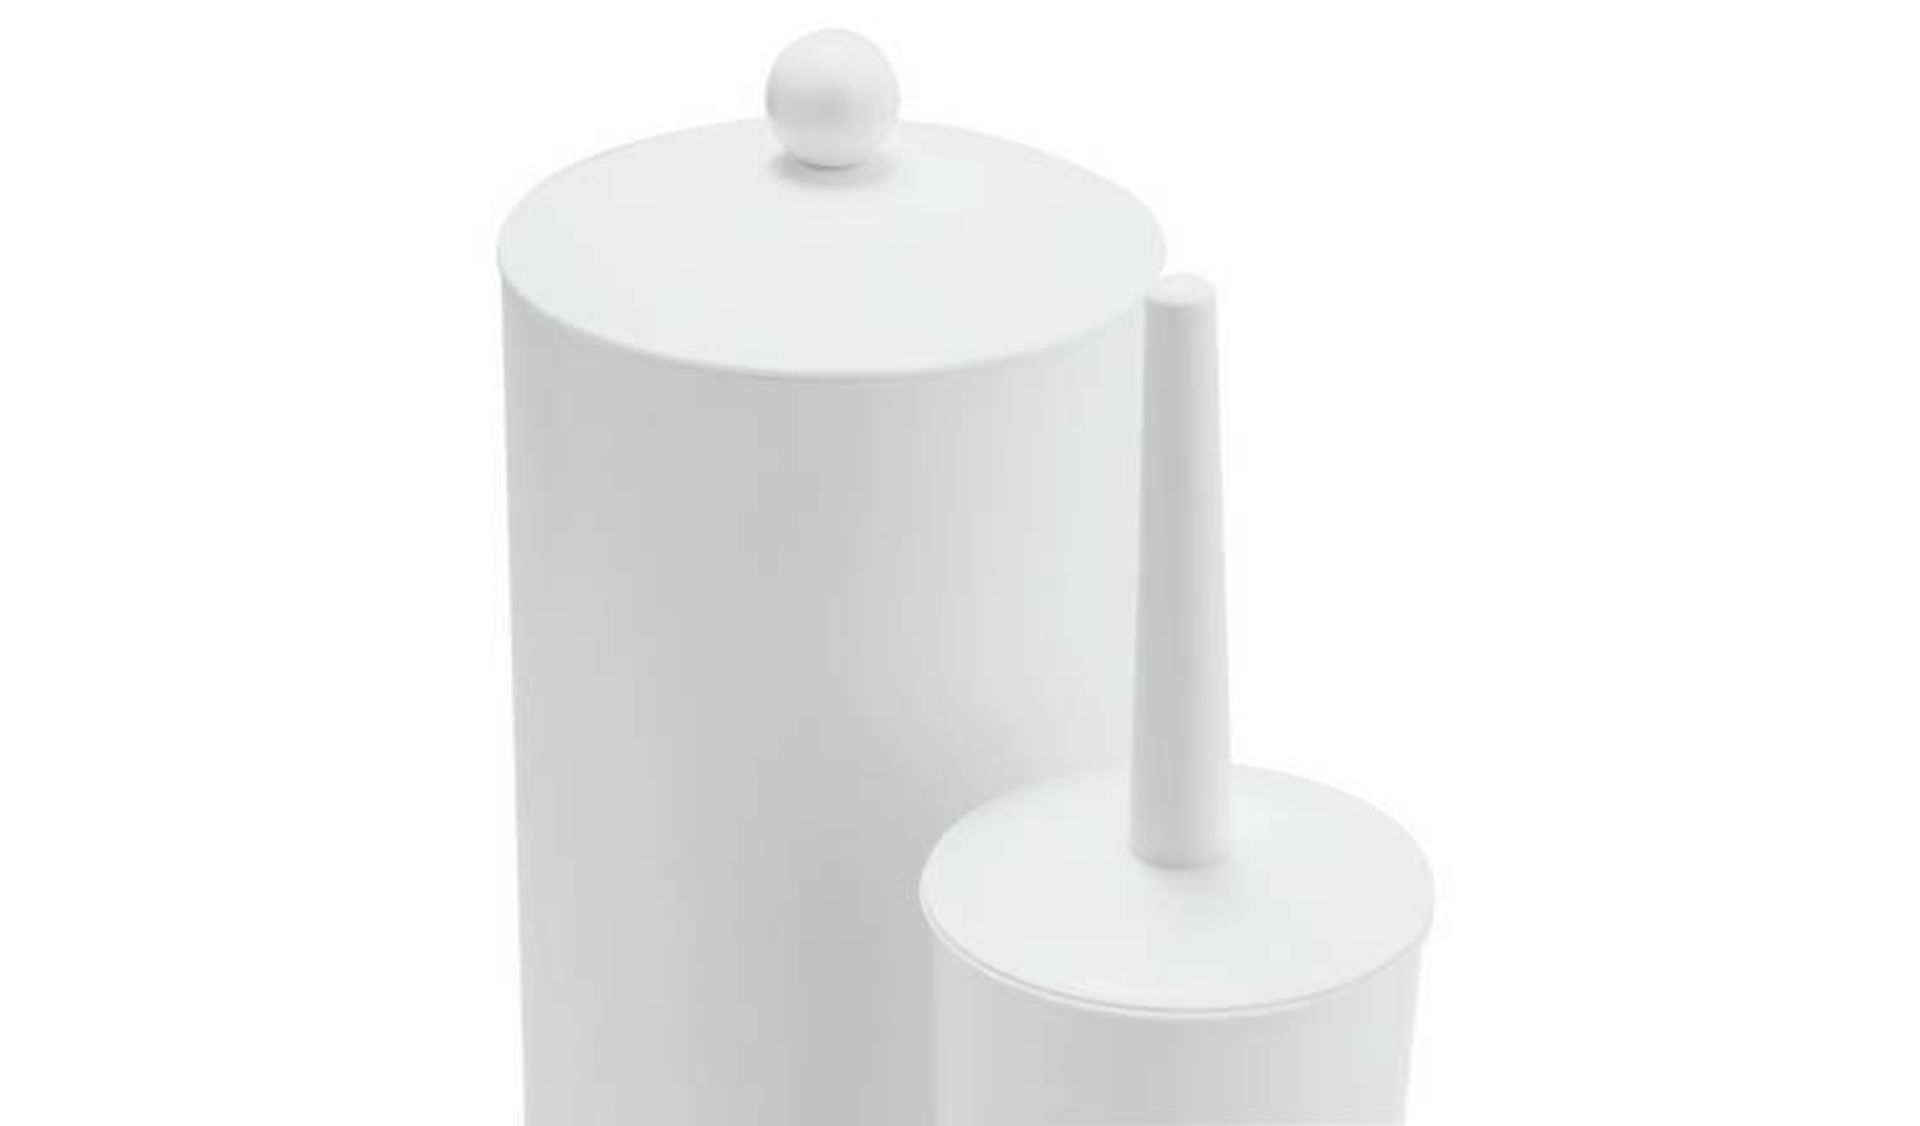 Argos Home Toilet Brush and Roll Holder - White 833/8994 £8.00 RRP